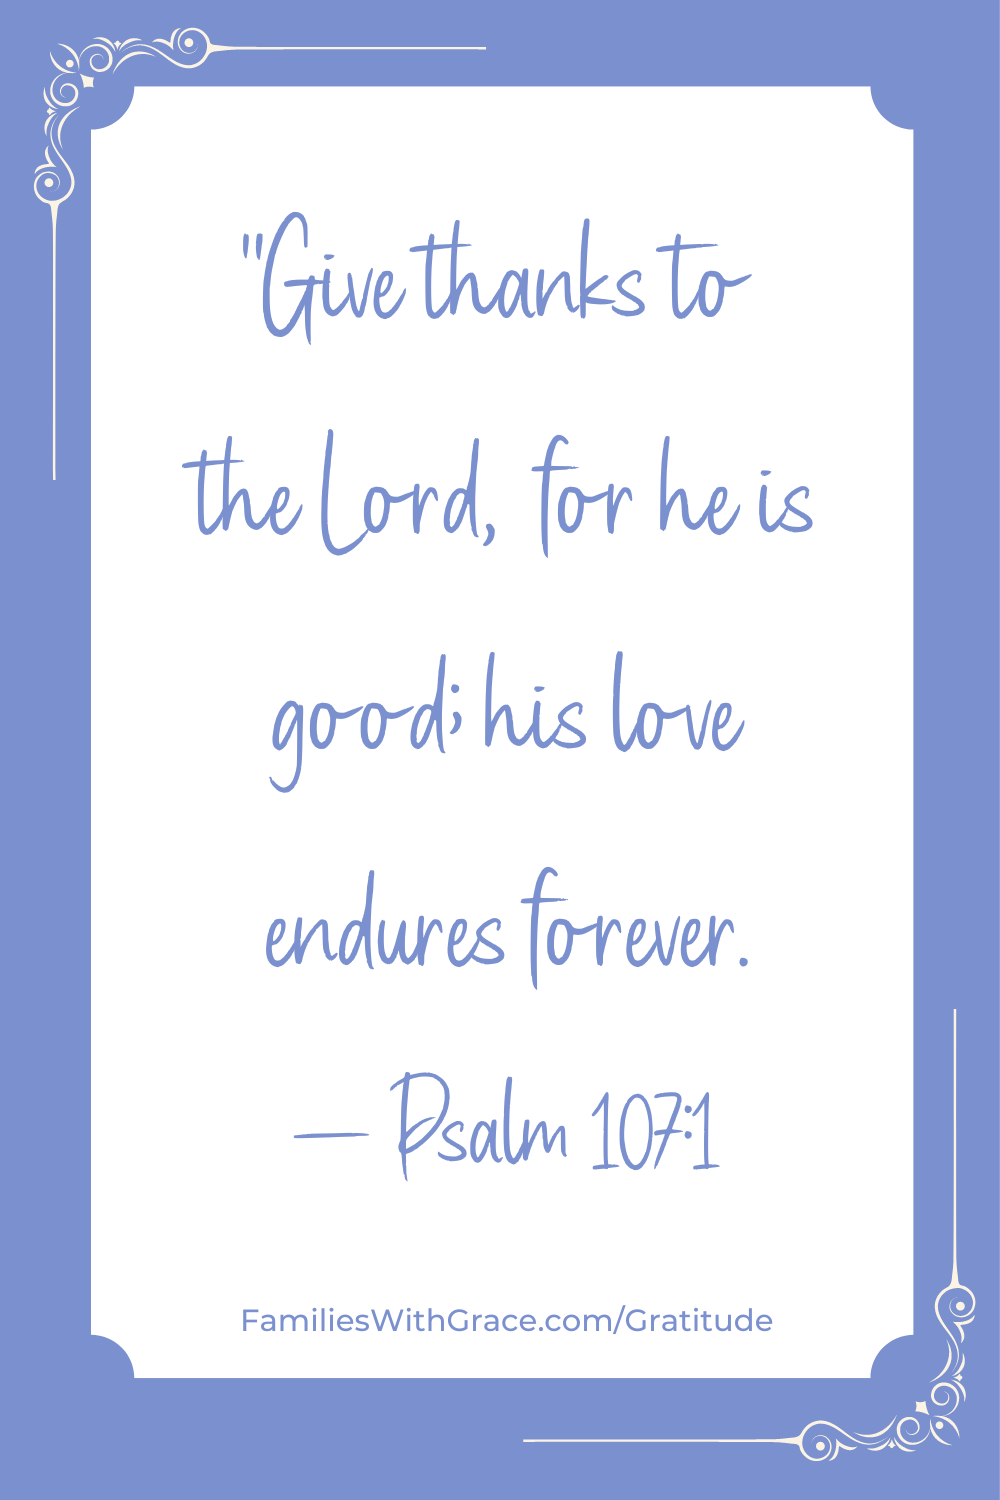 24 Free Scripture cards about gratitude